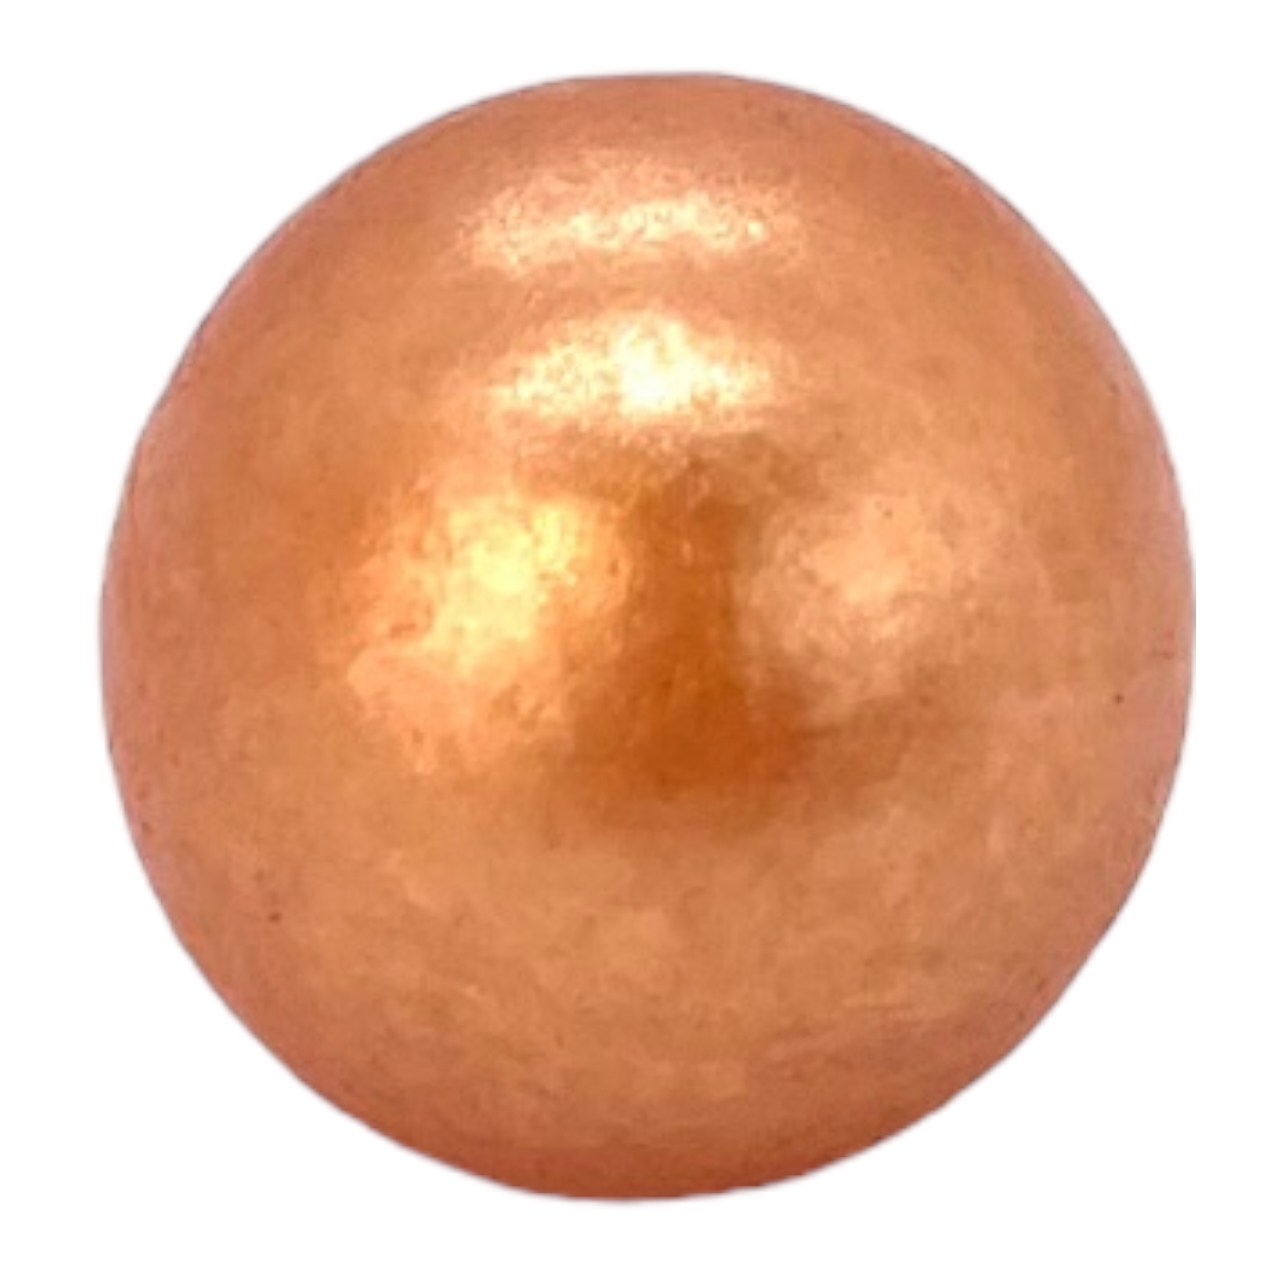 Choco Deco - Ball -  Bronze Klein - 66 Stück (20 x 20 mm)  Shantys